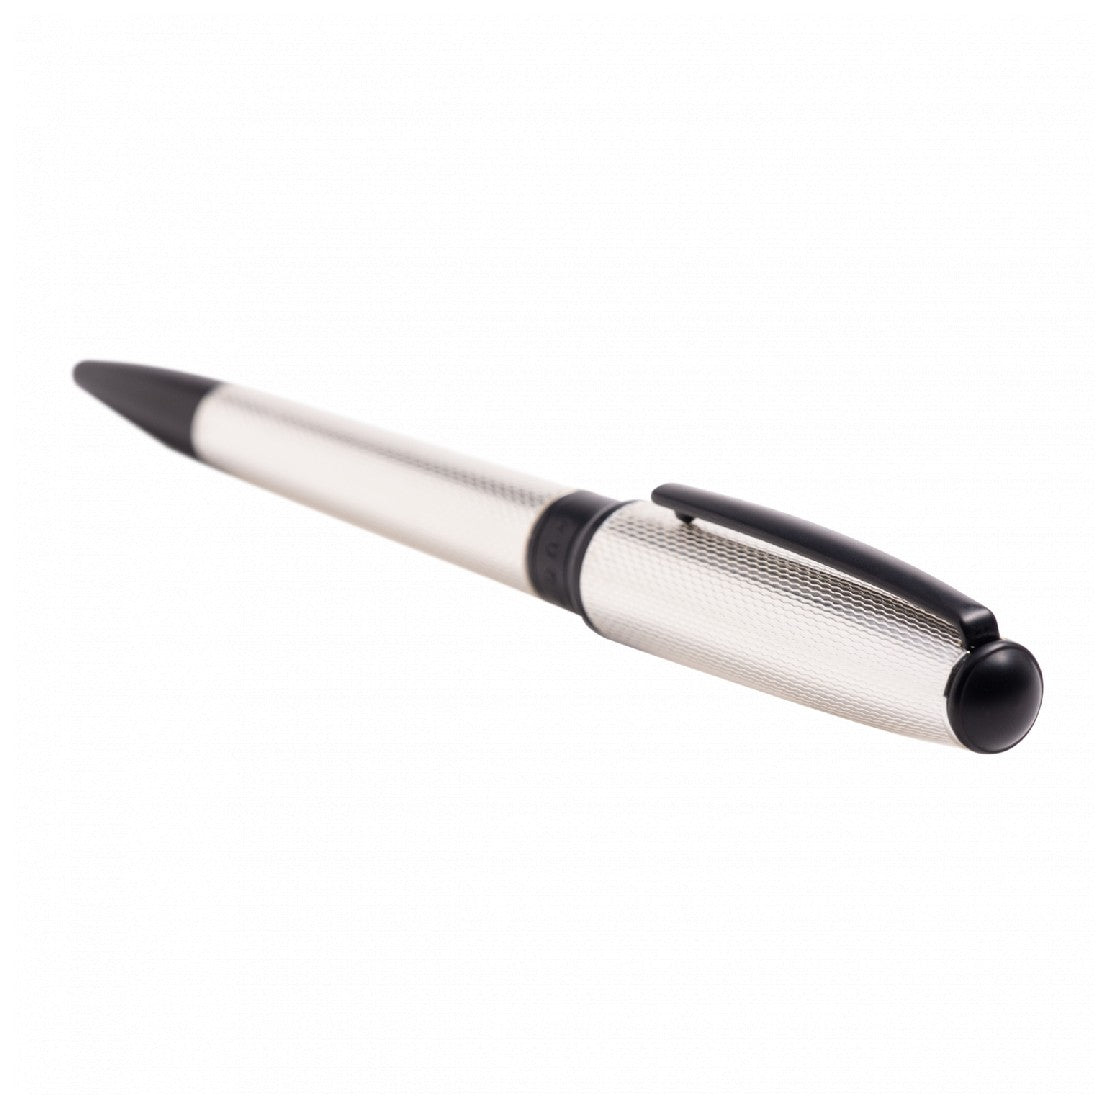 Hugo Boss Silver Color Pen - HBPEN-0026